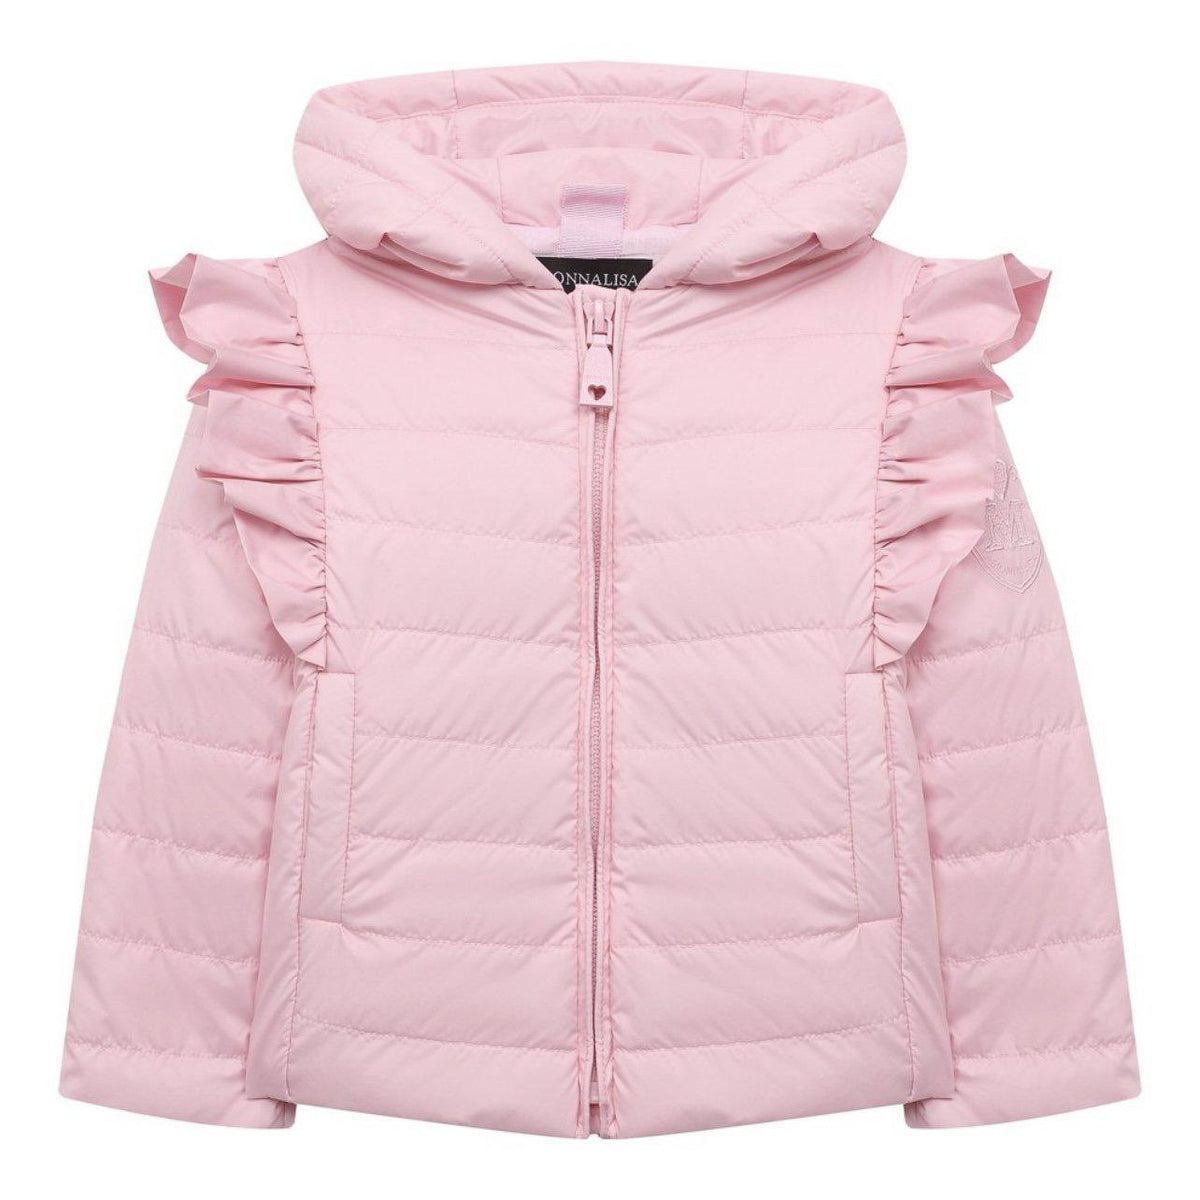 Monnalisa Baby Girls Pink Frill Jacket